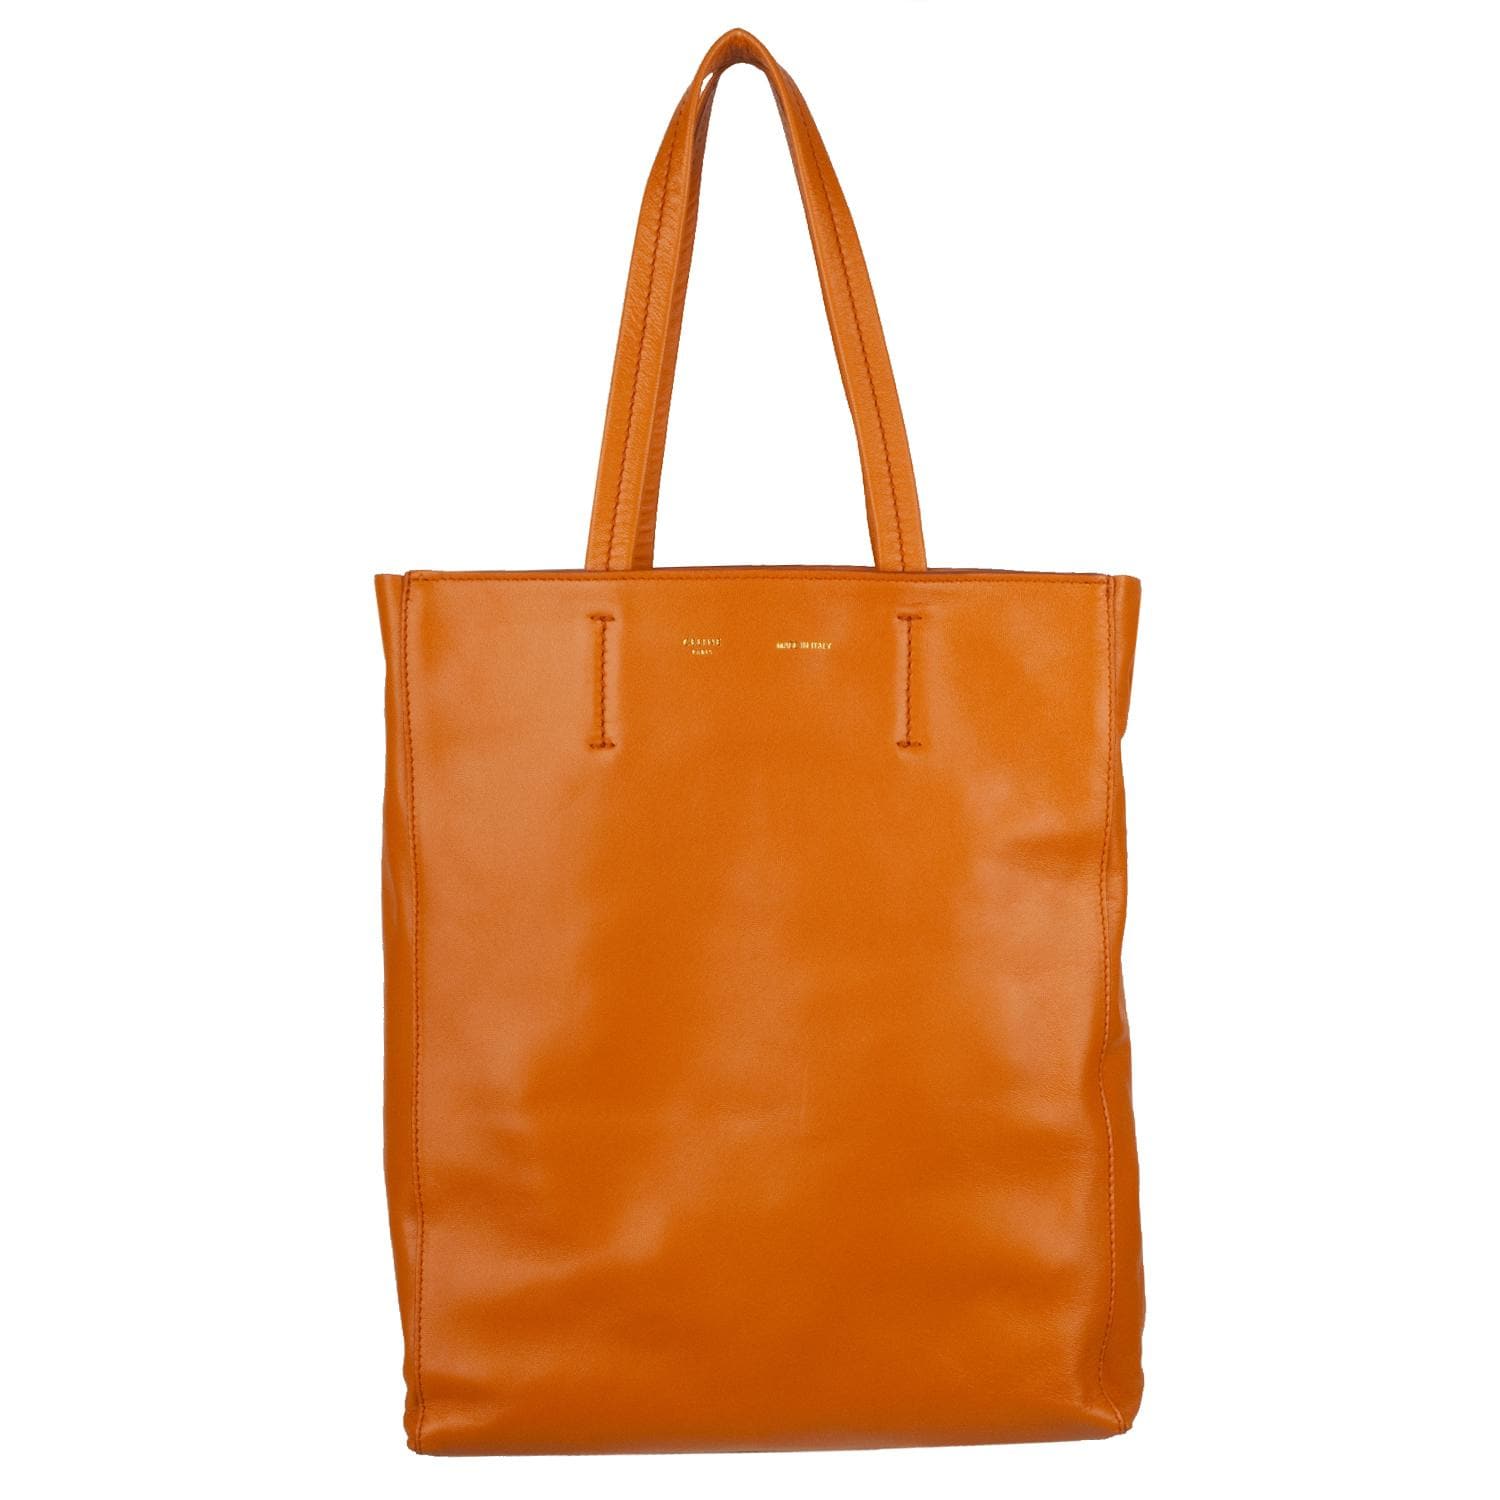 Celine \u0026#39;Cabas\u0026#39; Small Orange Leather Tote Bag - 13666137 ...